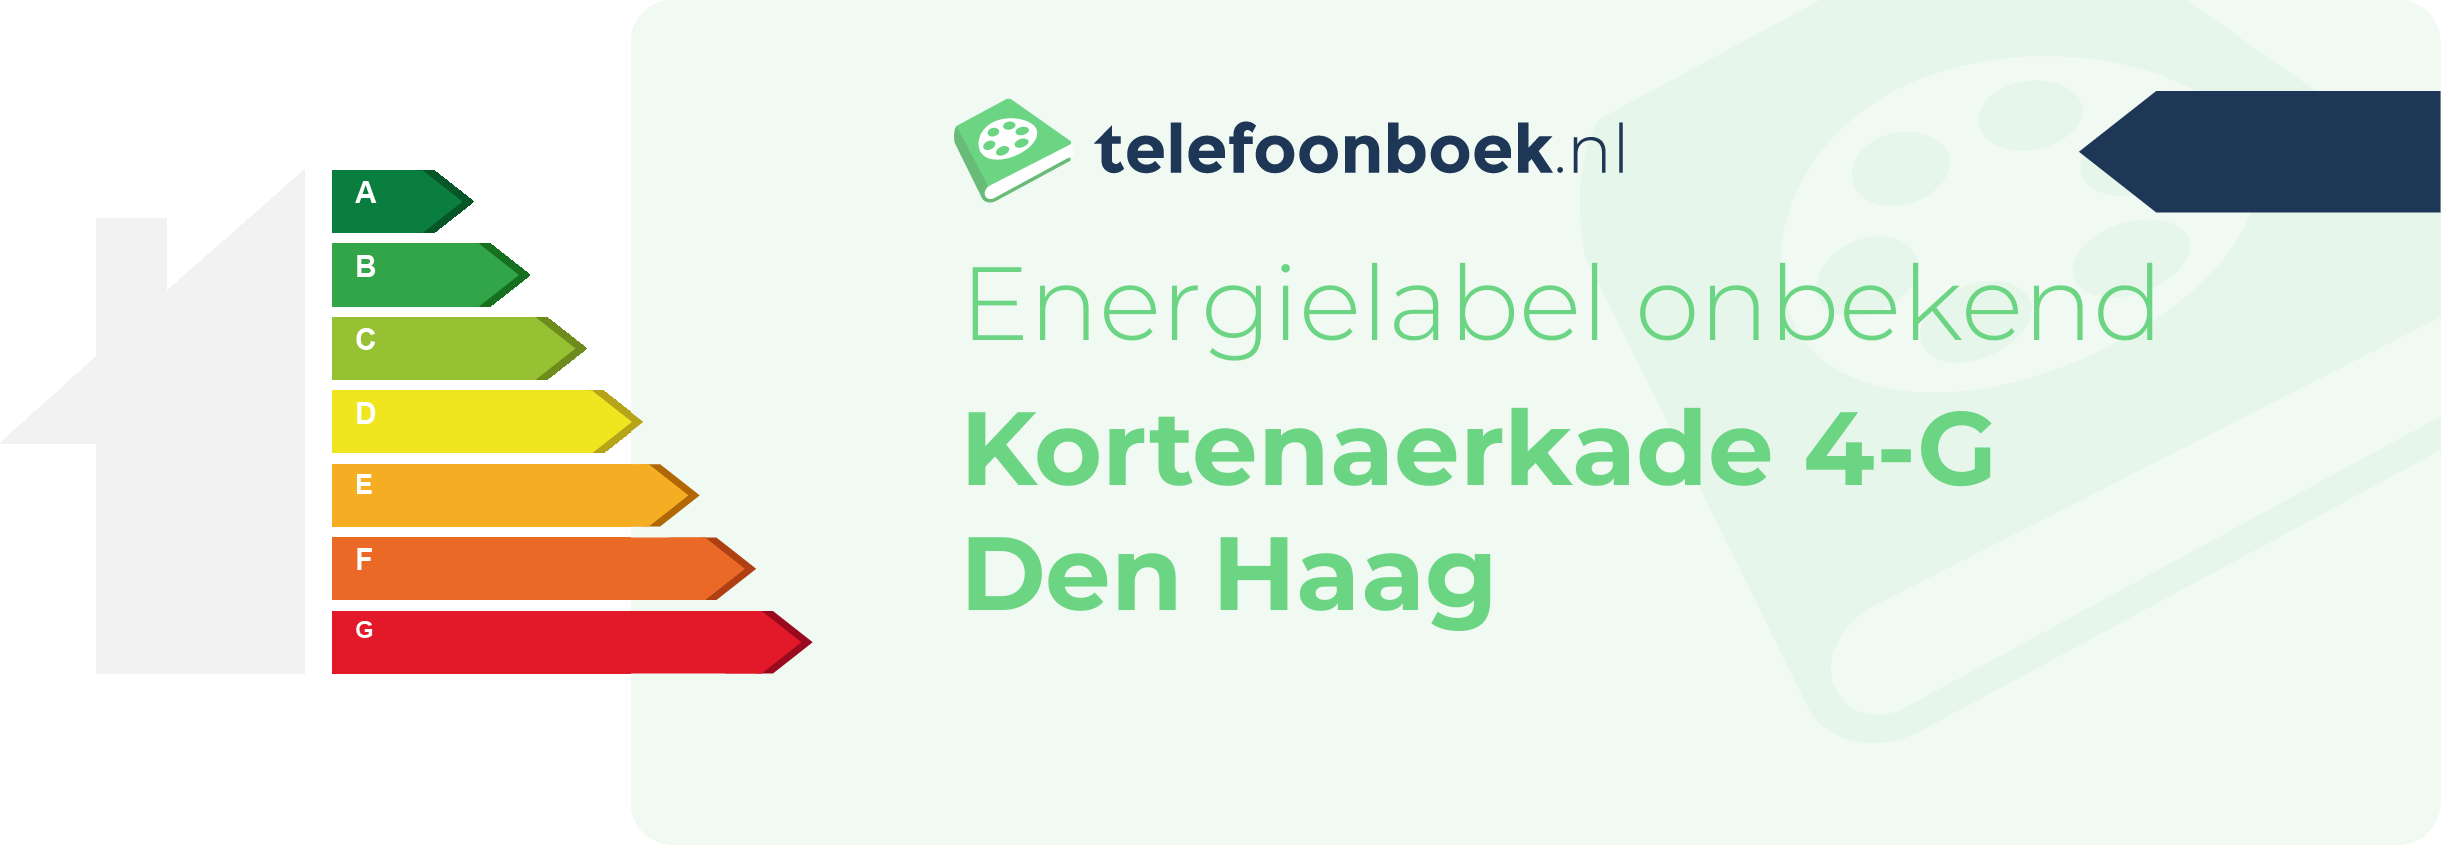 Energielabel Kortenaerkade 4-G Den Haag